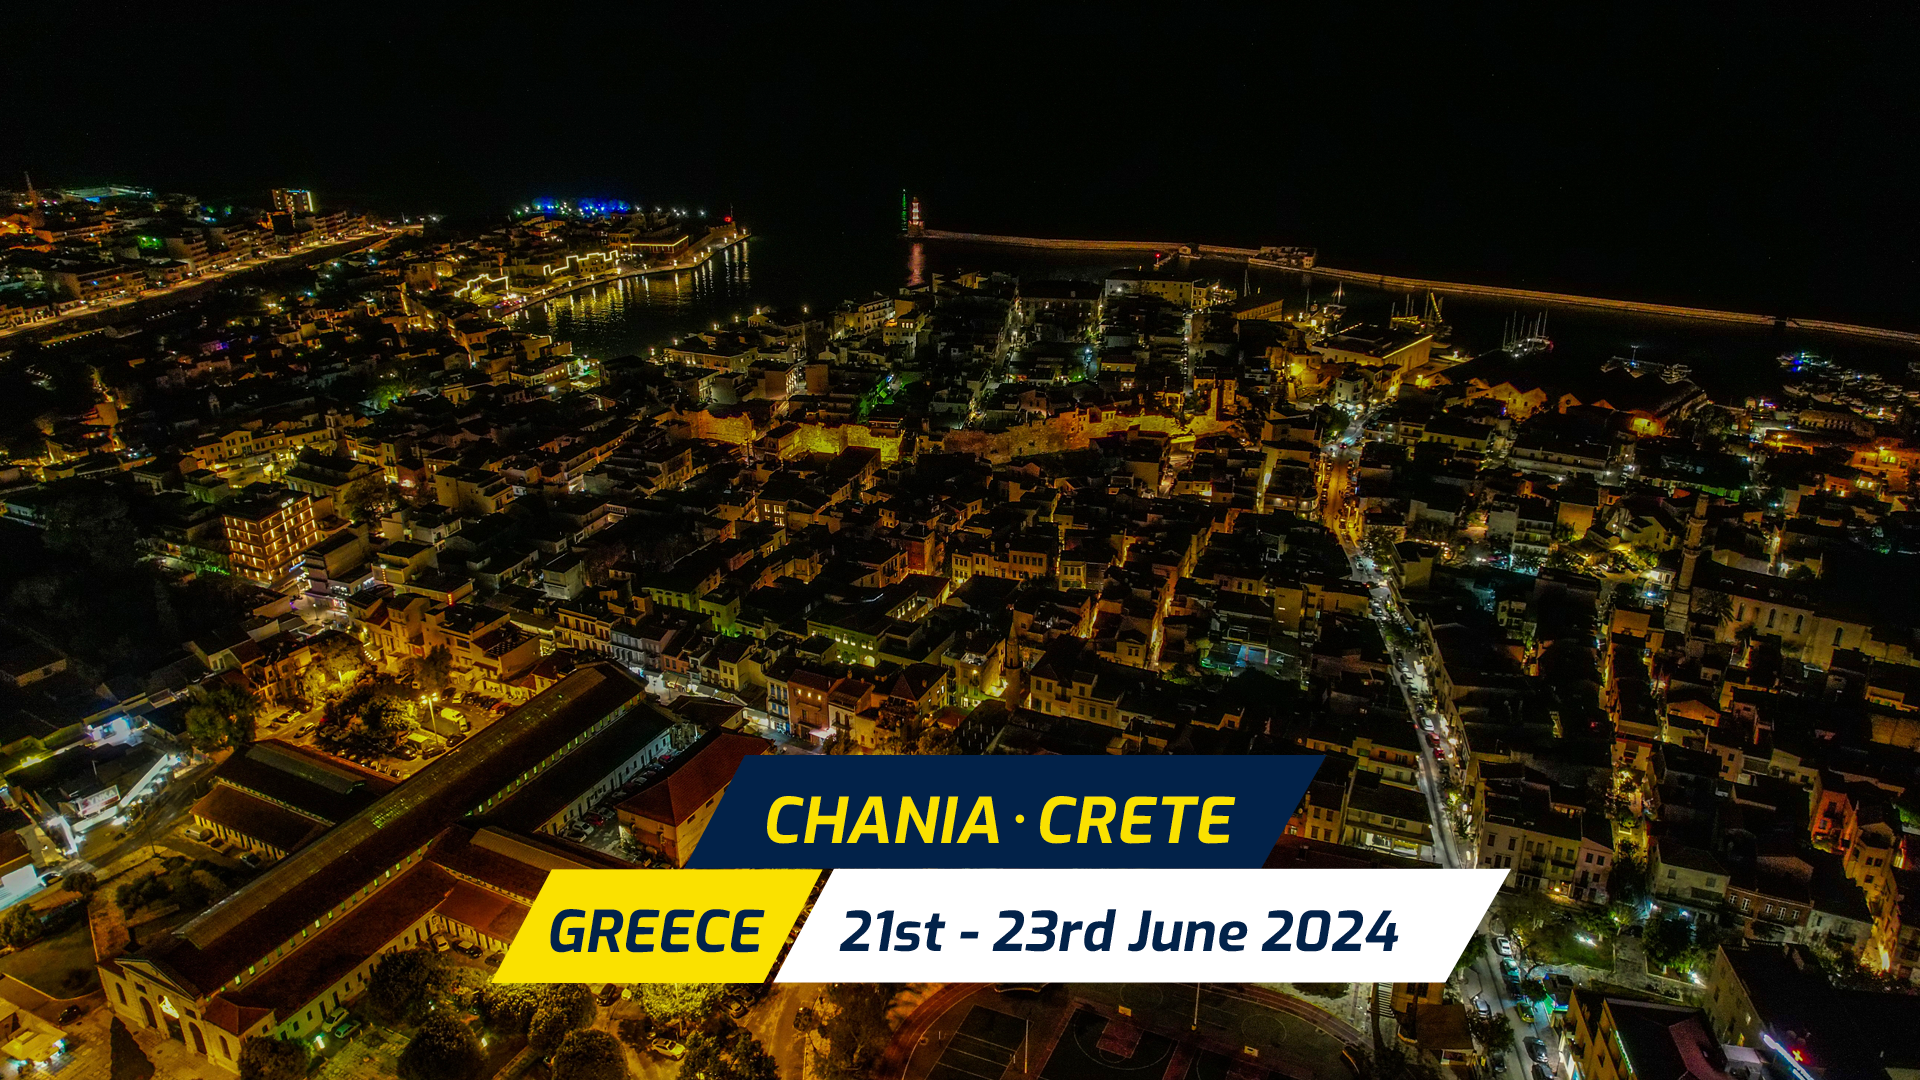 OCEANMAN CHANIA, CRETE - GREECE 2024